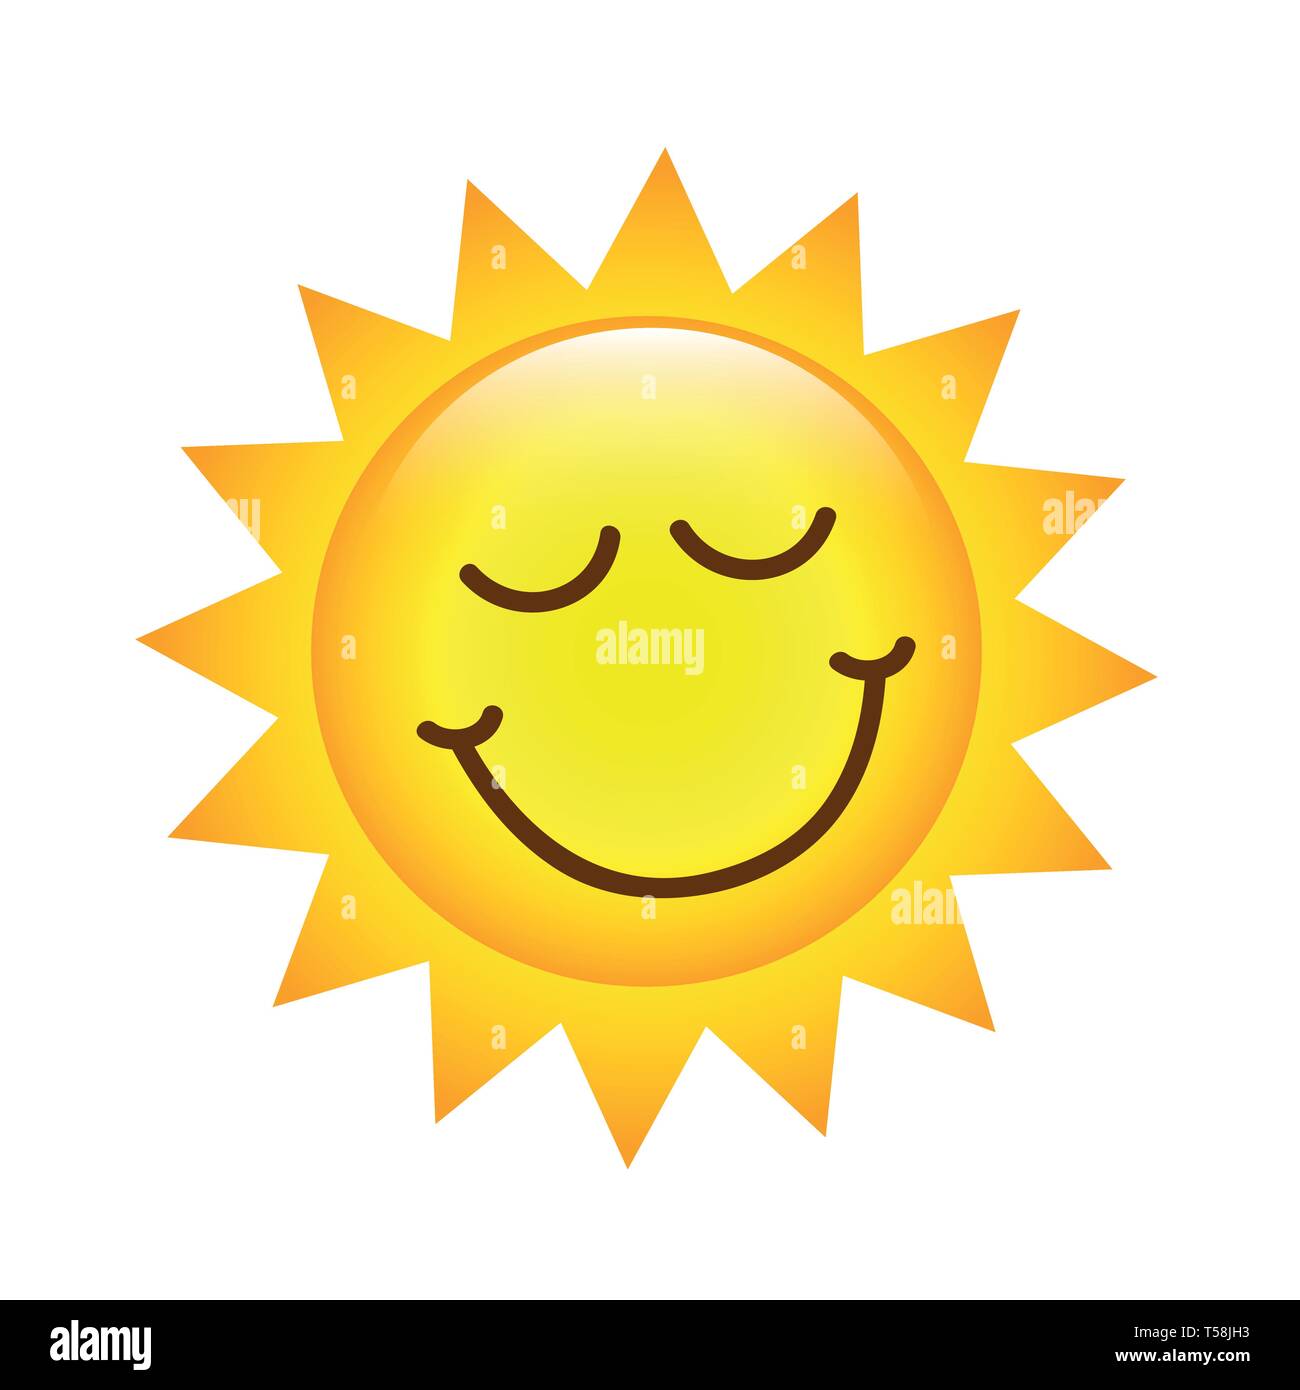 cartoon sun with smiley emoticon vector illustration EPS10 Stock Vector